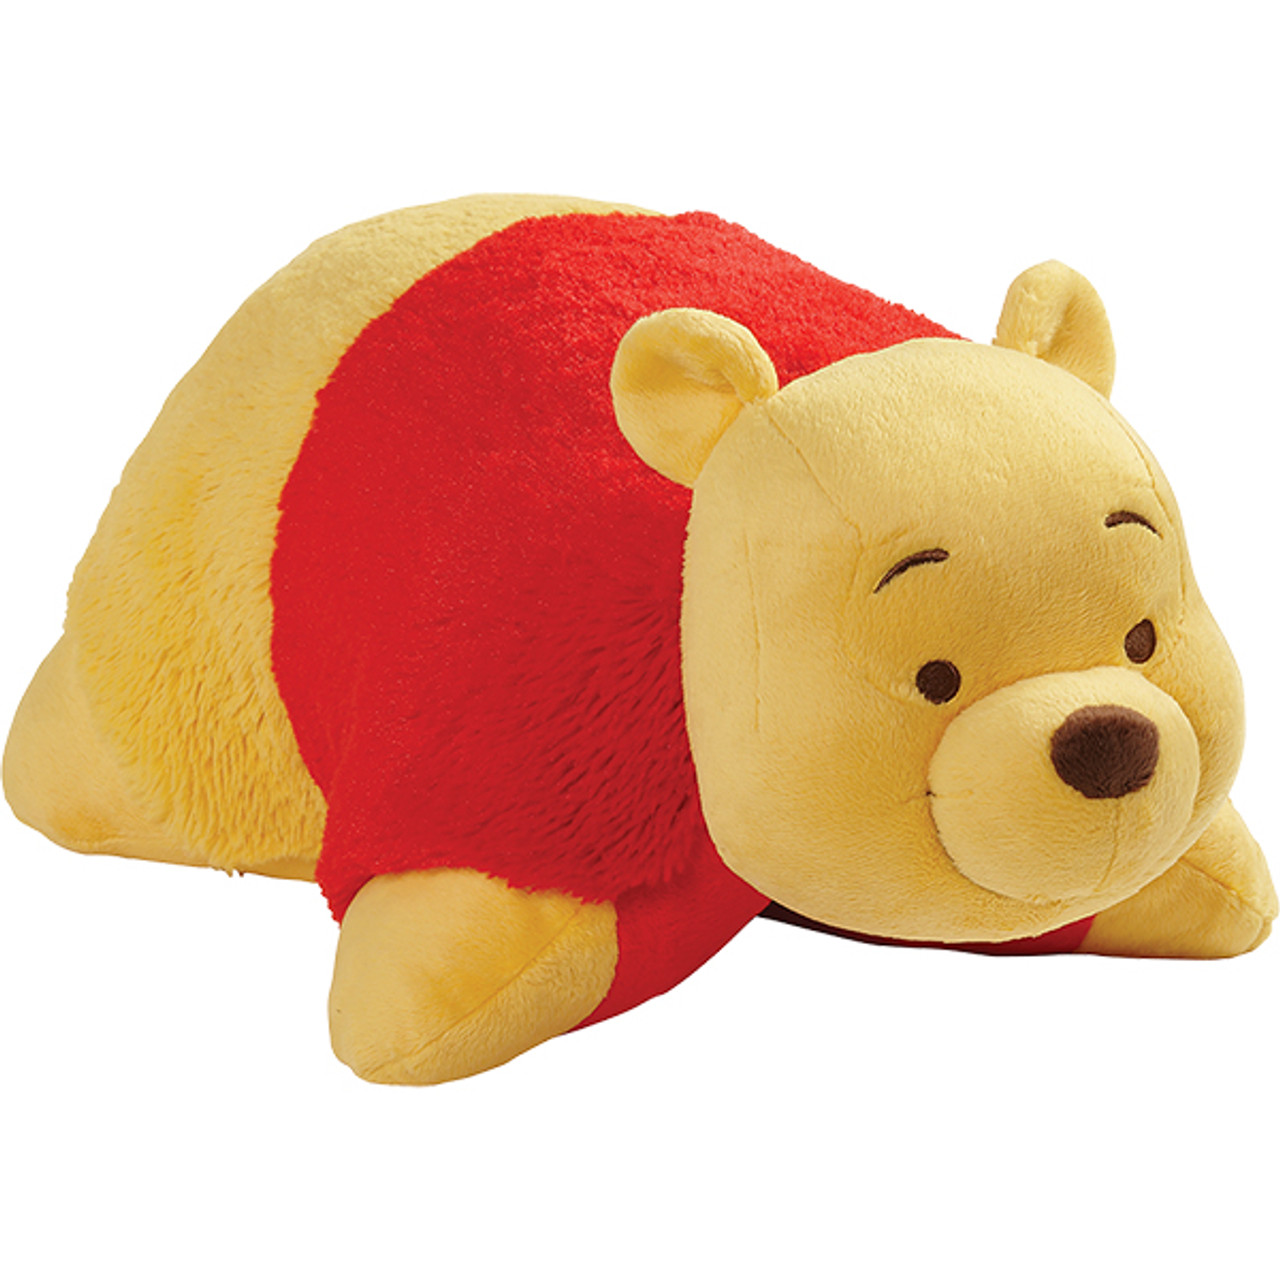 Pillow Pets Stuffed Animal, Winnie The Pooh